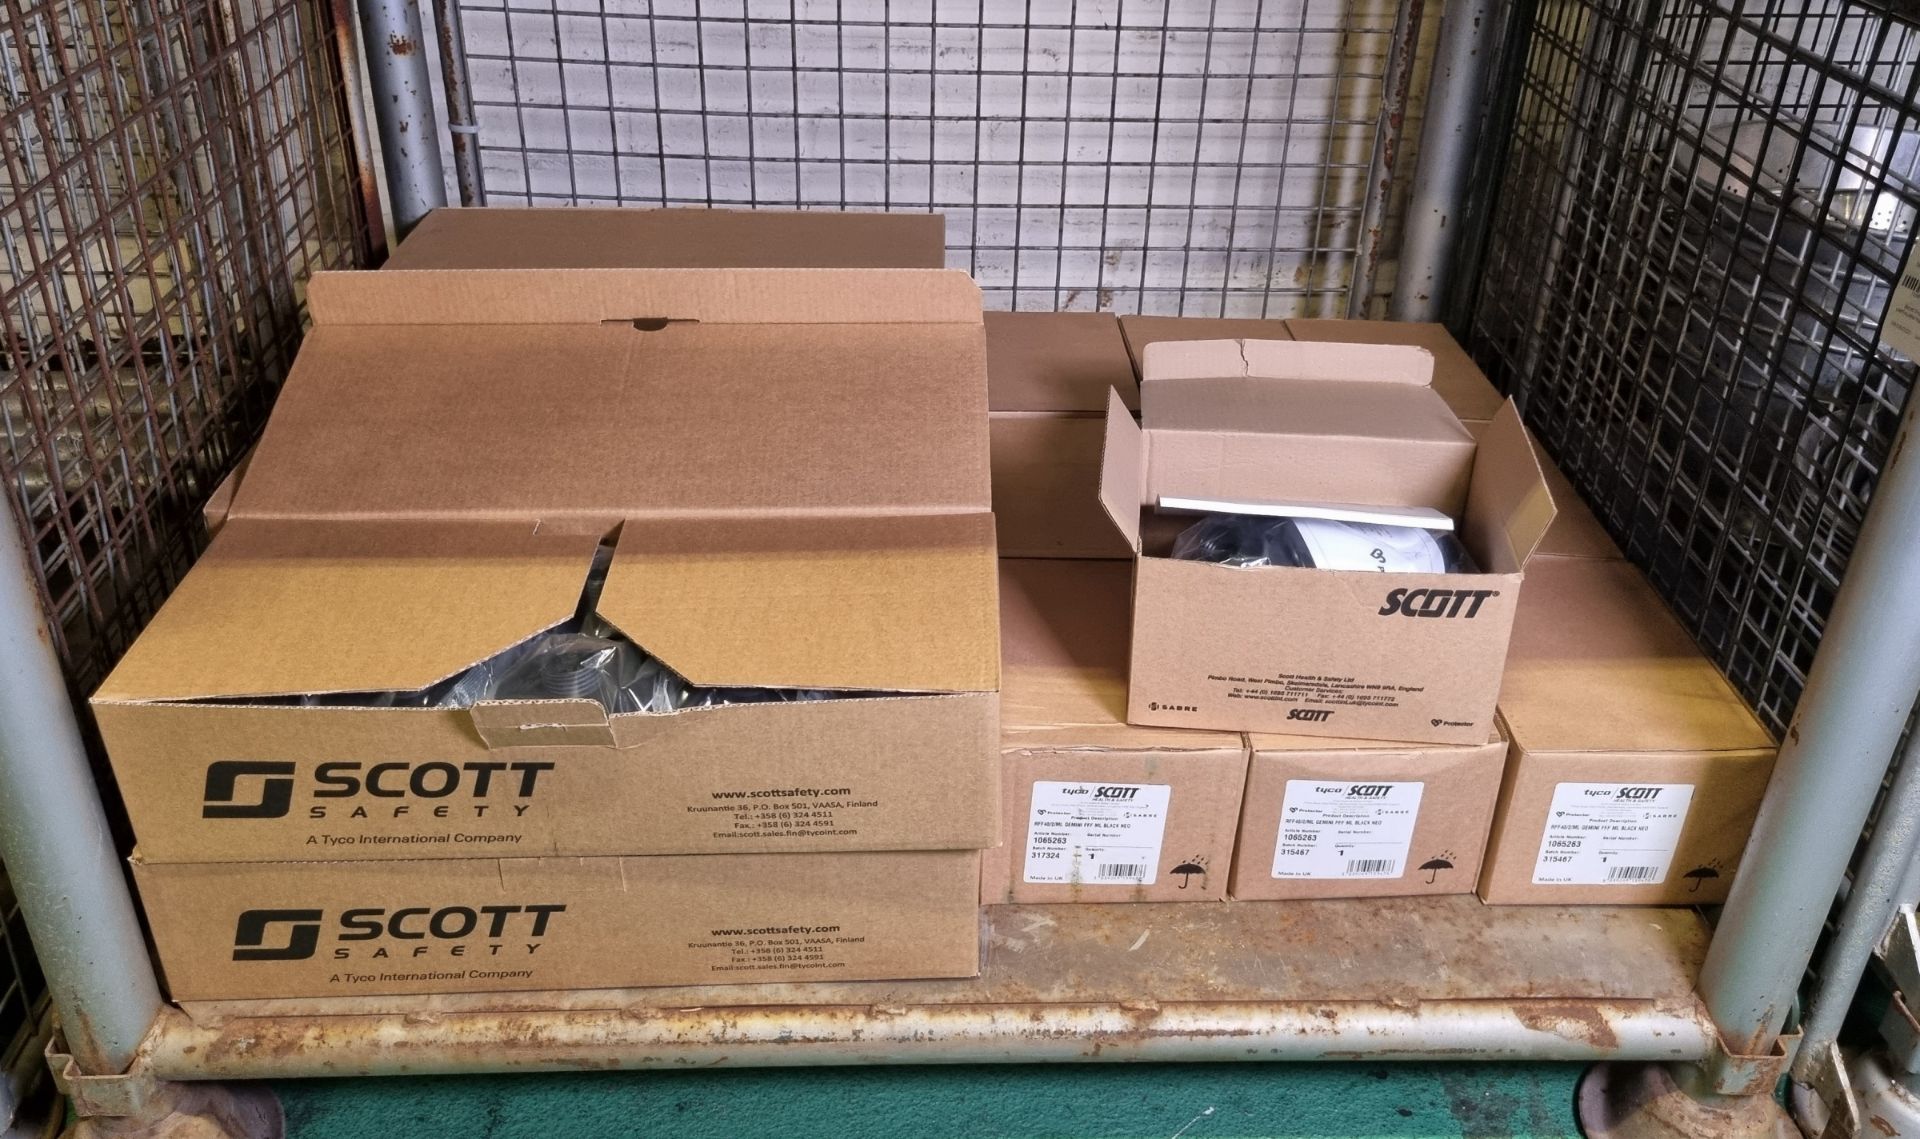 9x boxes of Scott RFF/40/2/ML Gemini full face masks - black, 8x boxes of Scott Pro2000 PF 10